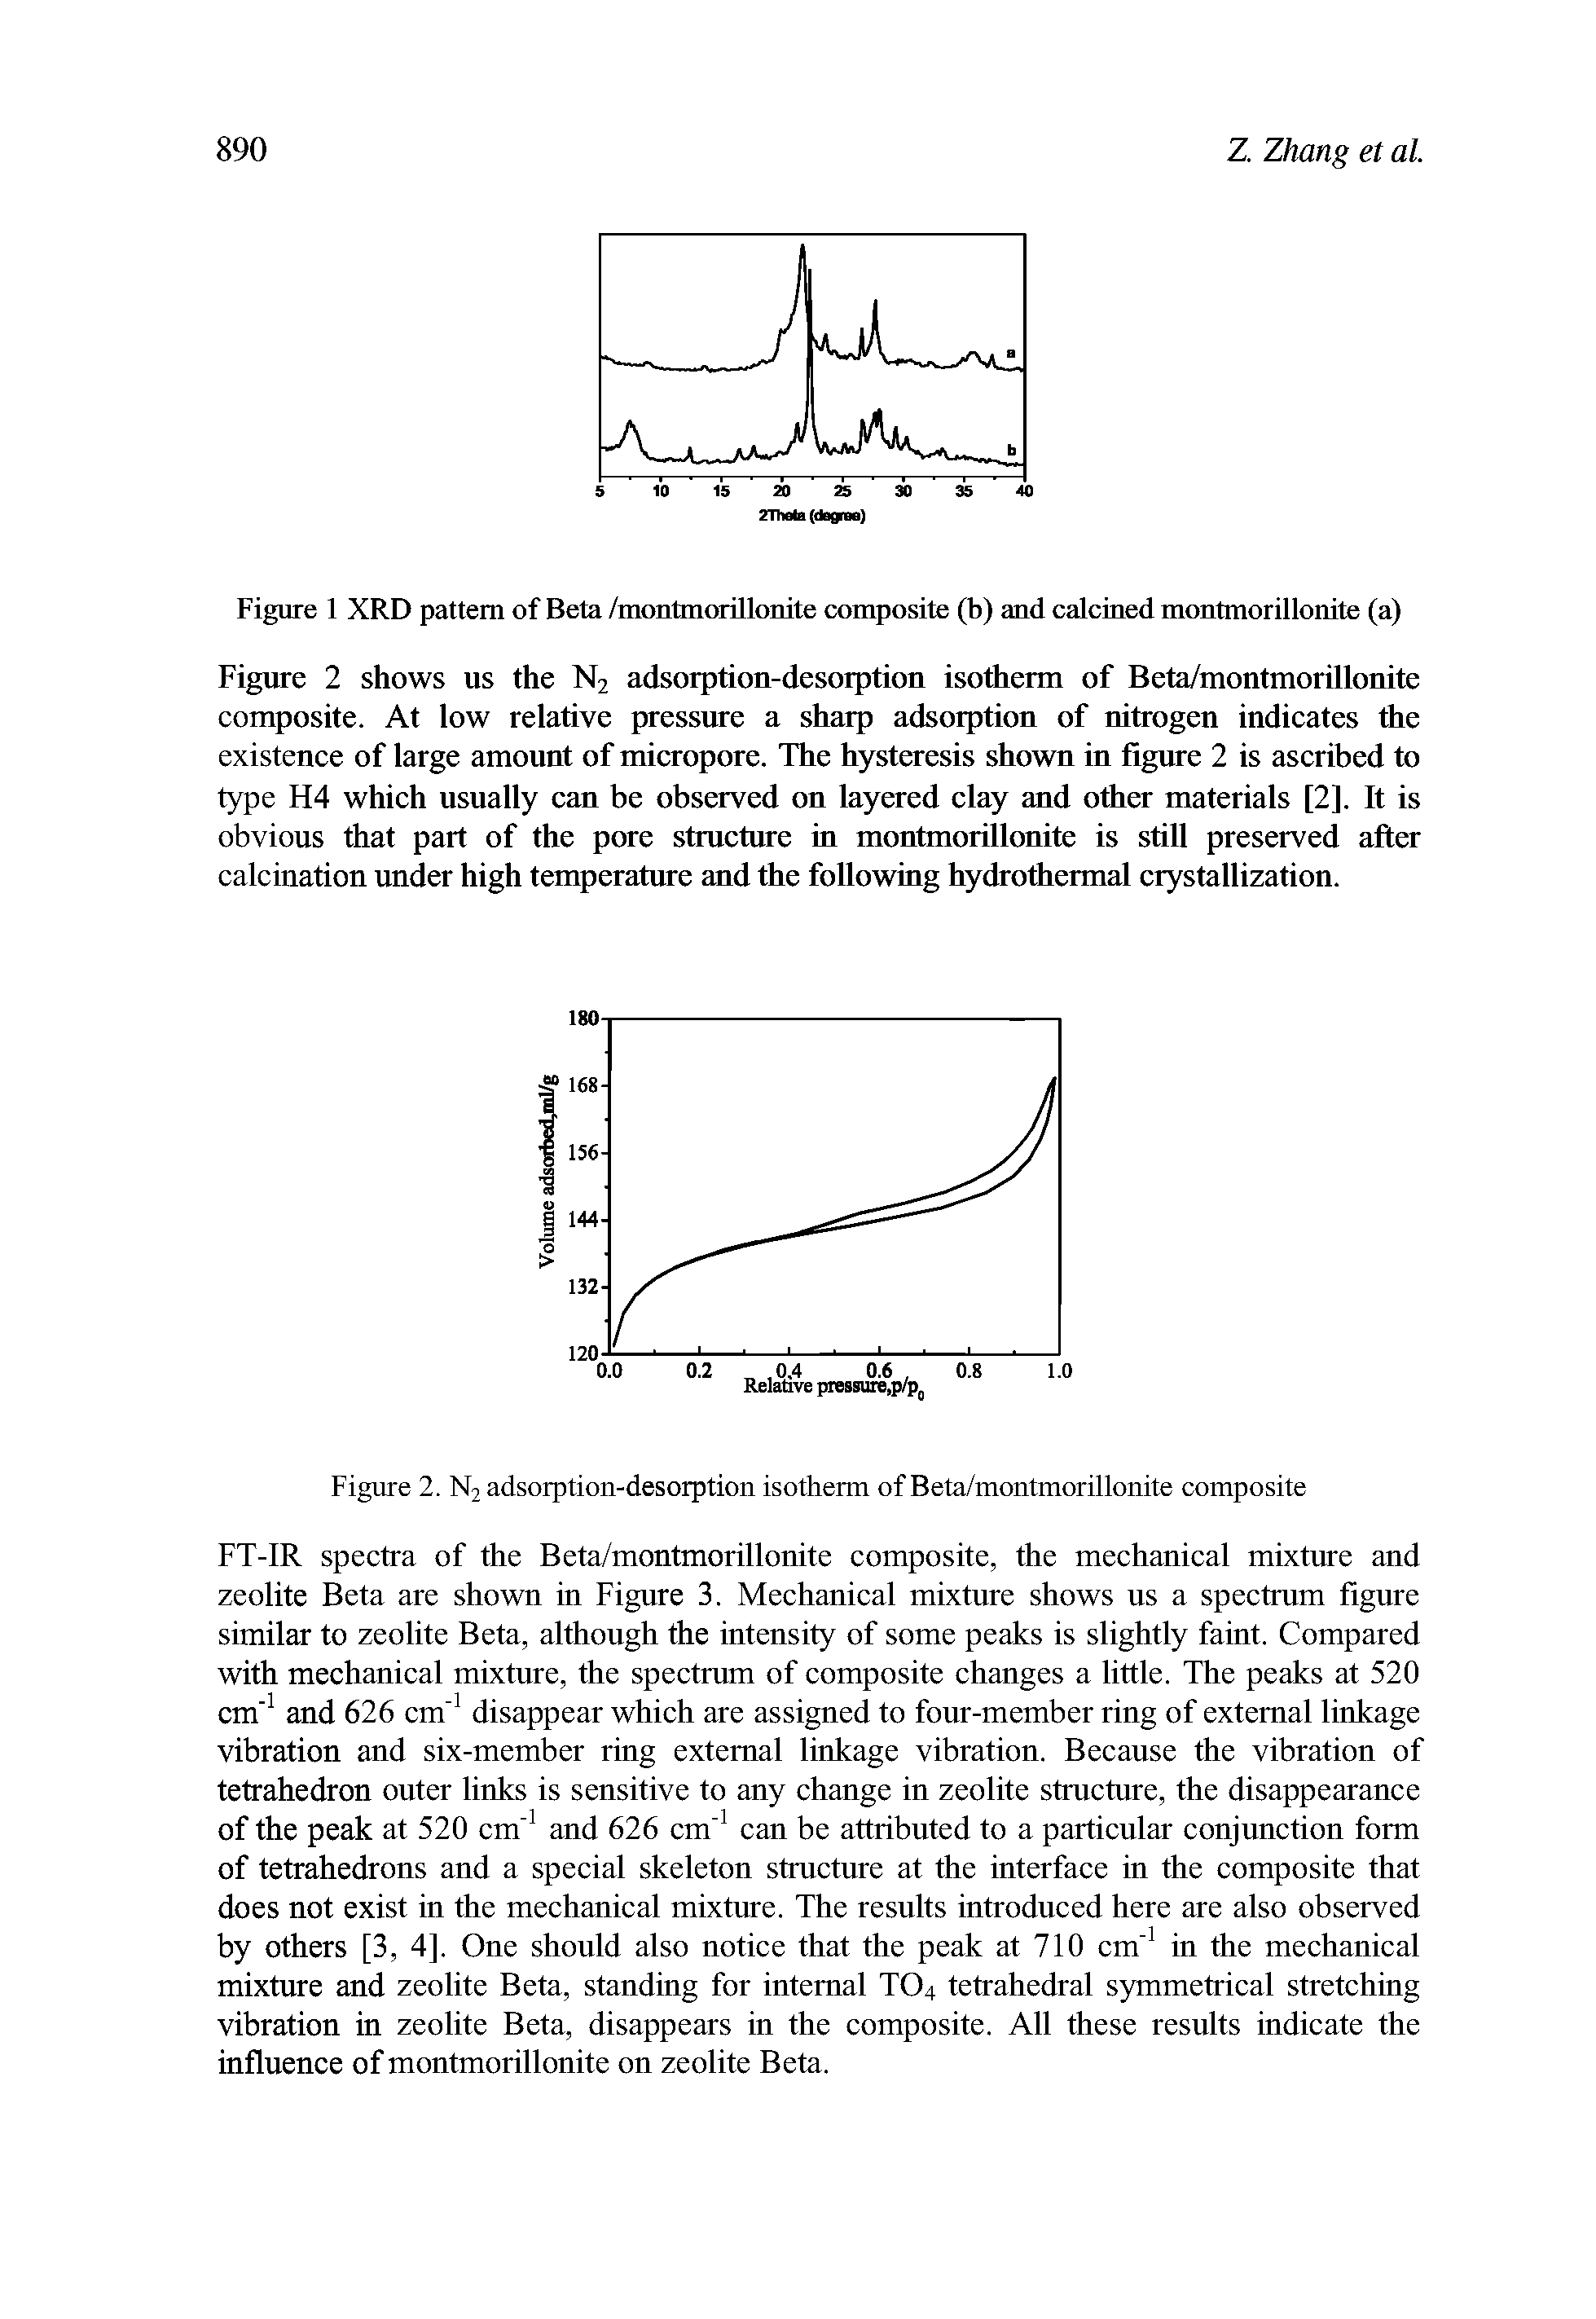 Figure 2. N2 adsorption-desorption isotherm of Beta/montmorillonite composite...